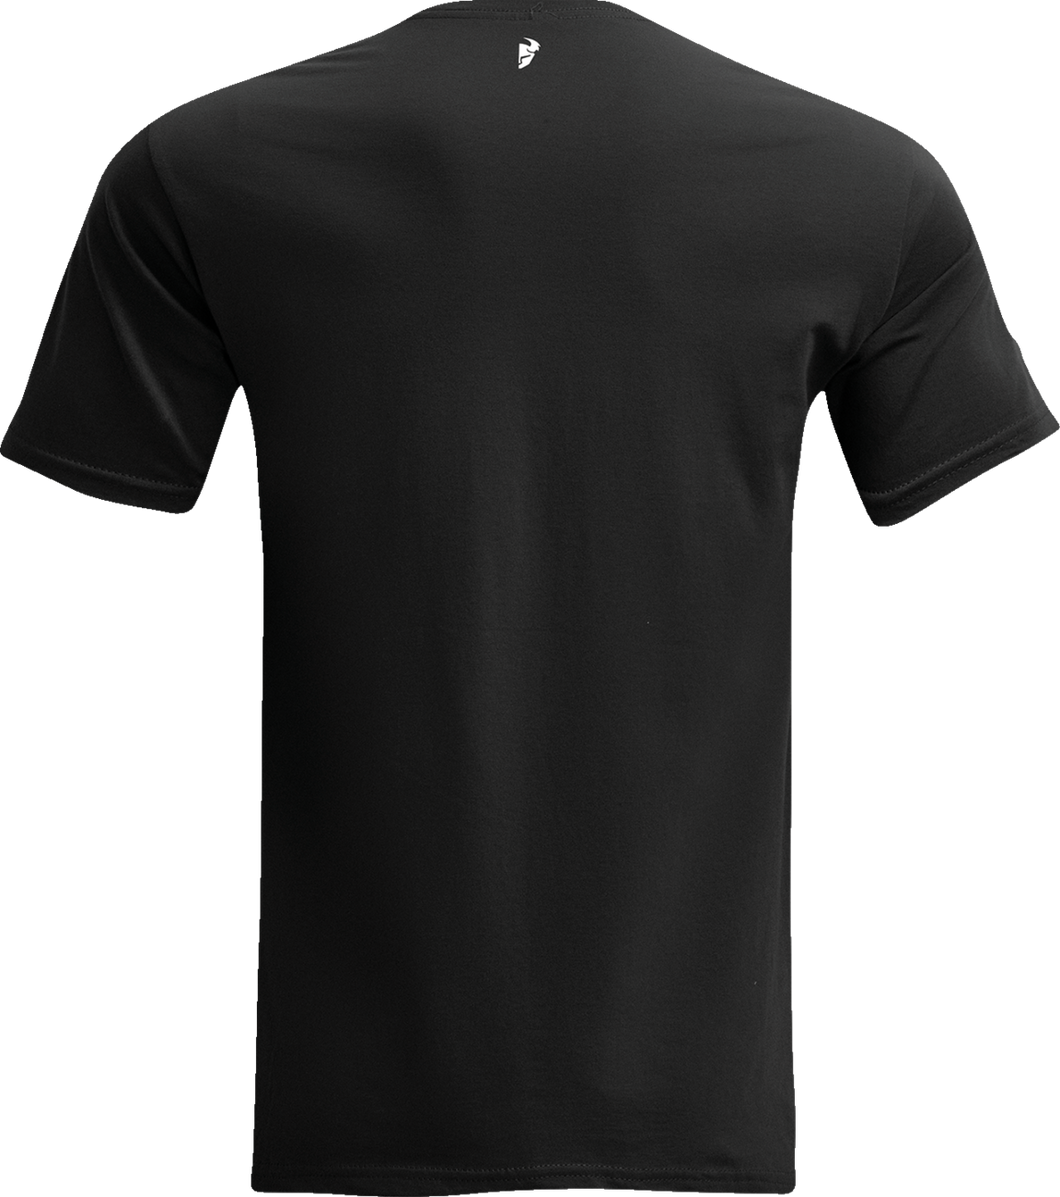 Channel T-Shirt - Black - Small - Lutzka's Garage